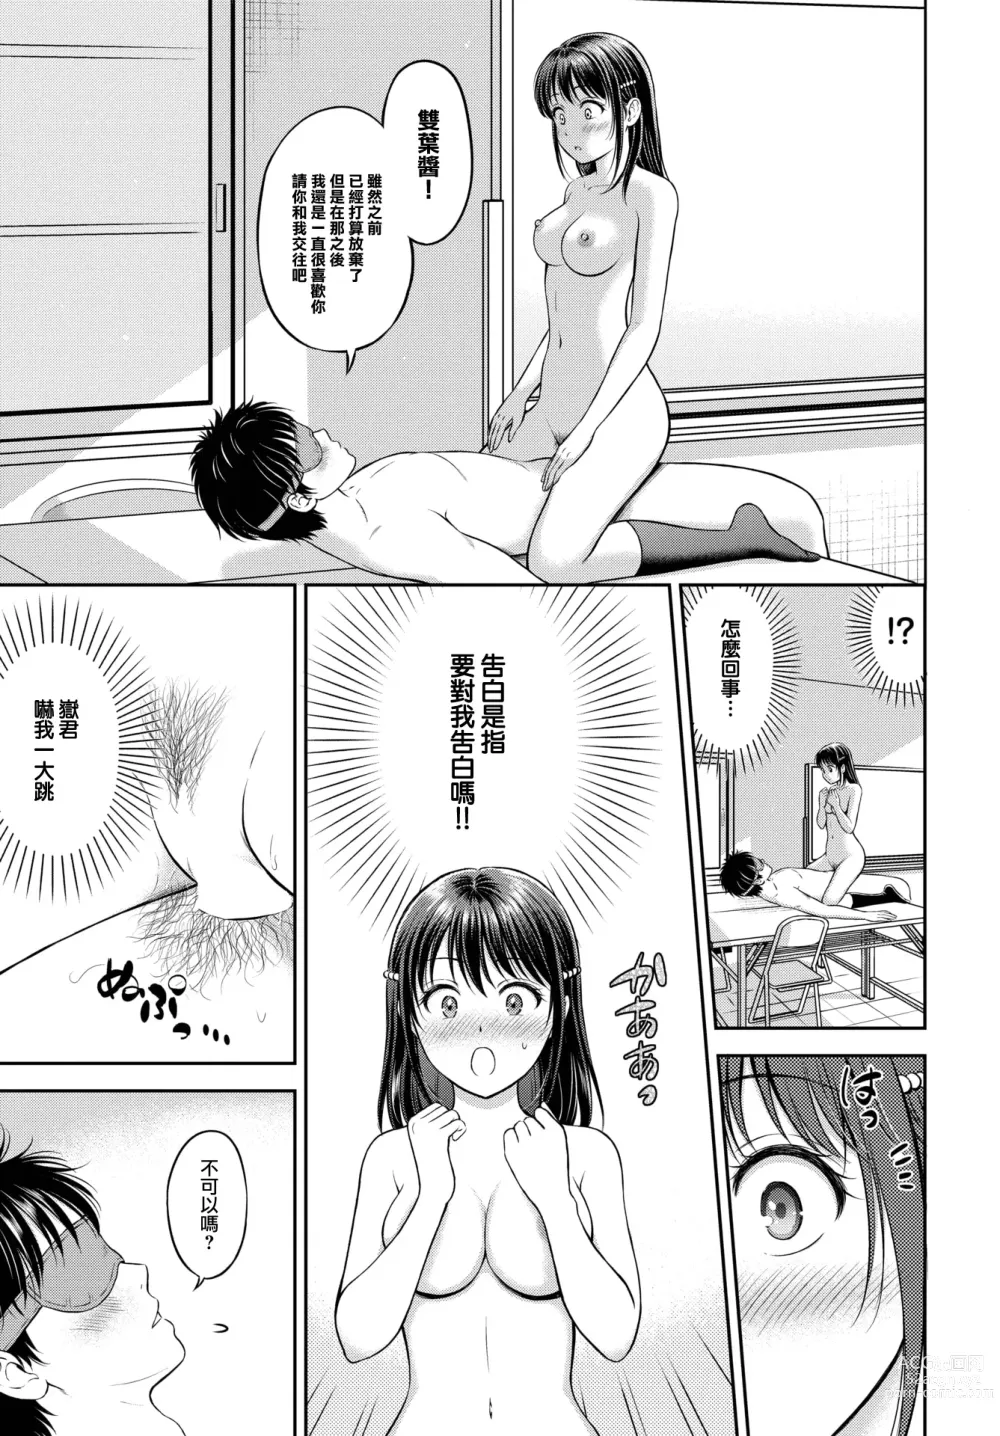 Page 30 of manga Kawari ni Narimasu - Im going to take her place. -Kouhen-